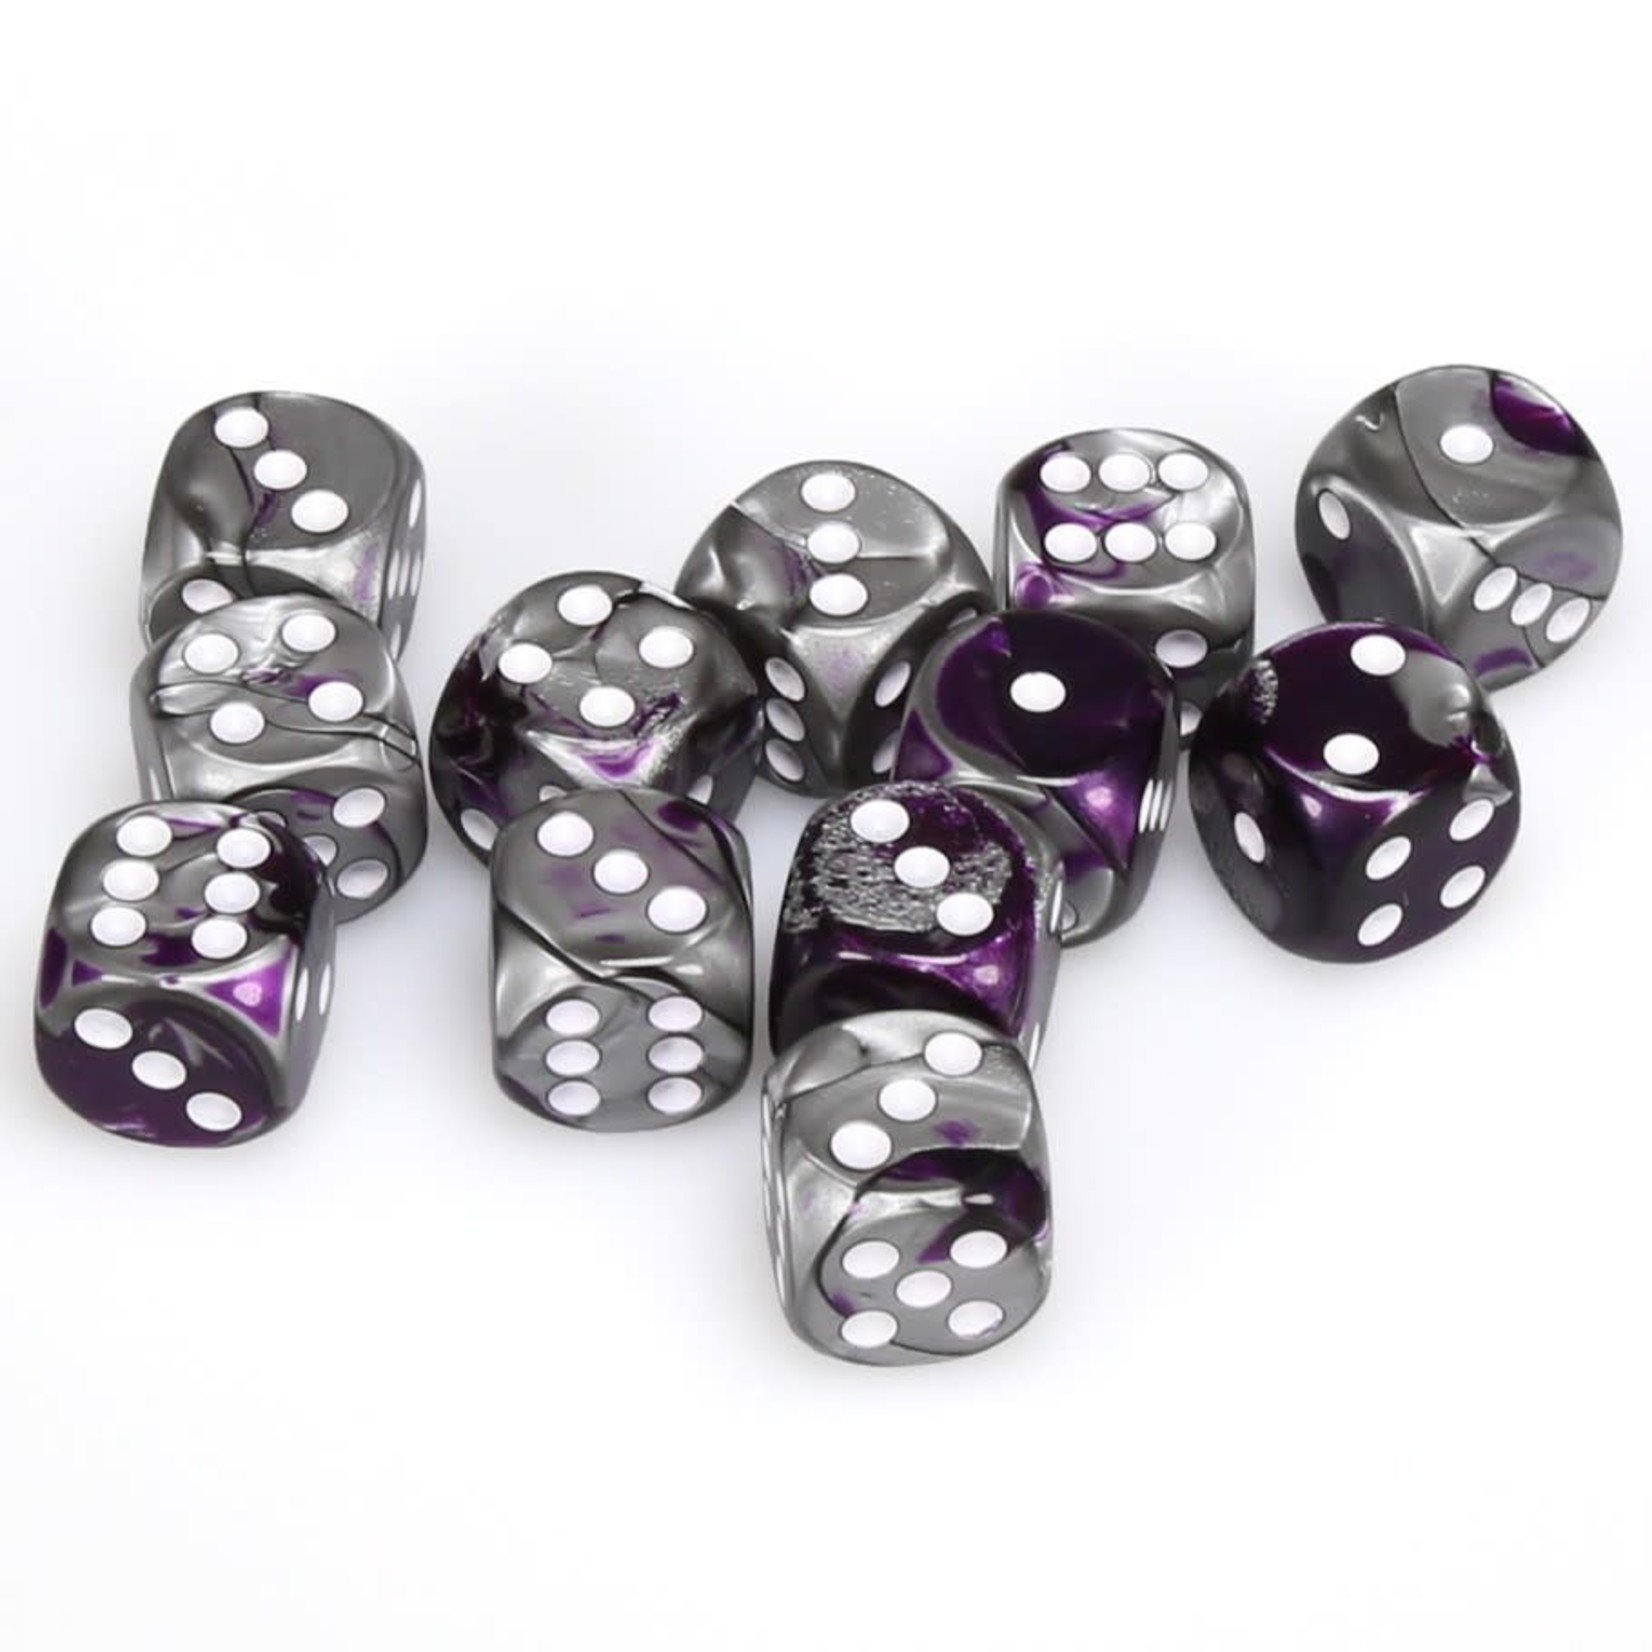 Chessex Chessex Gemini Purple / Steel with White 16 mm d6 12 die set